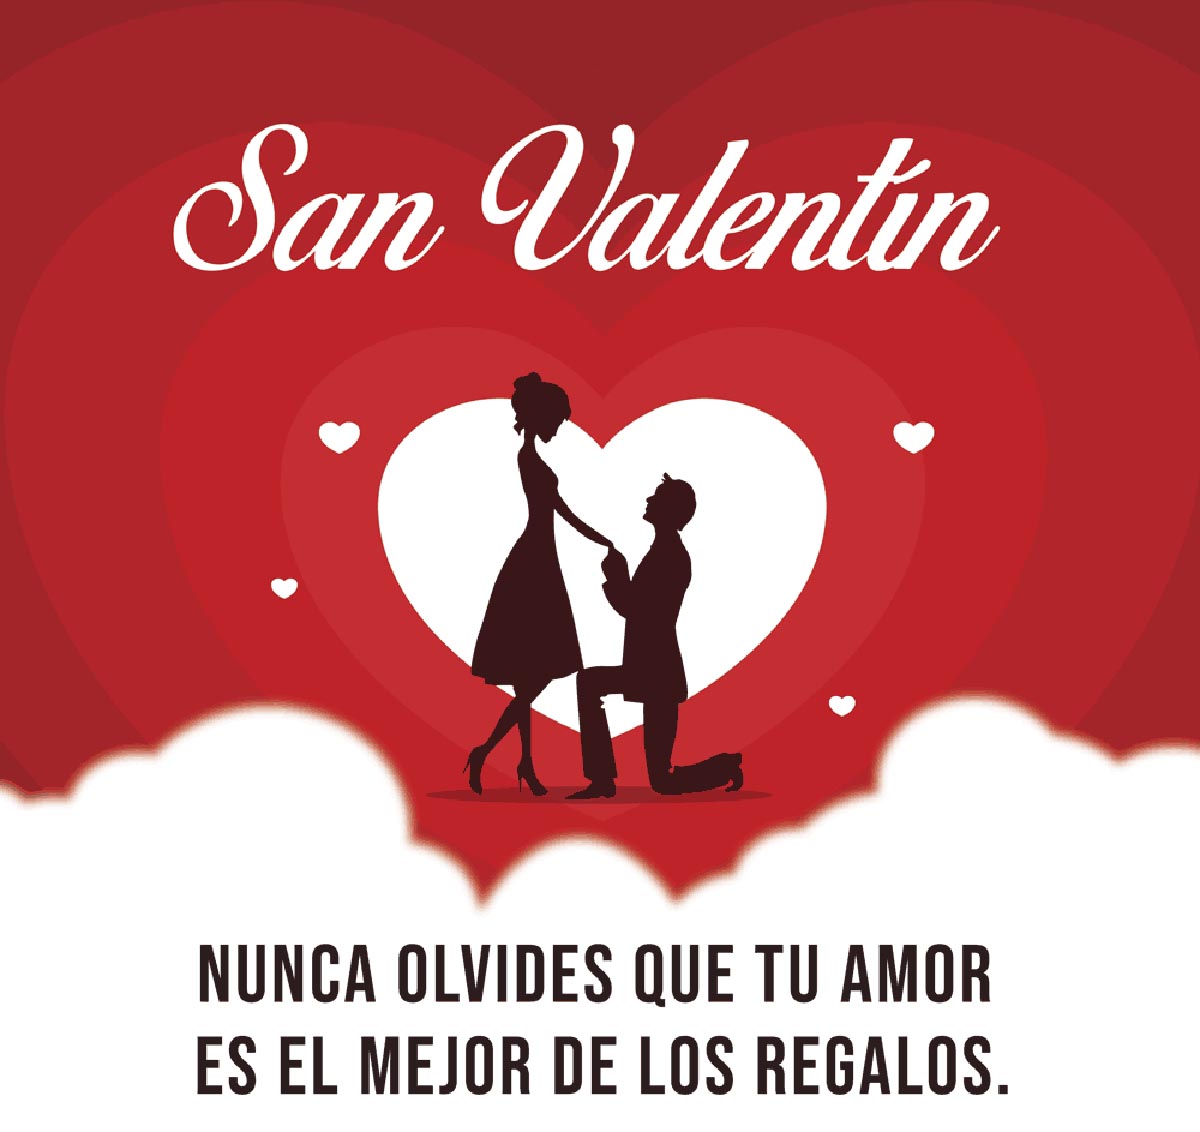 Imagen para felicitar San Valentín